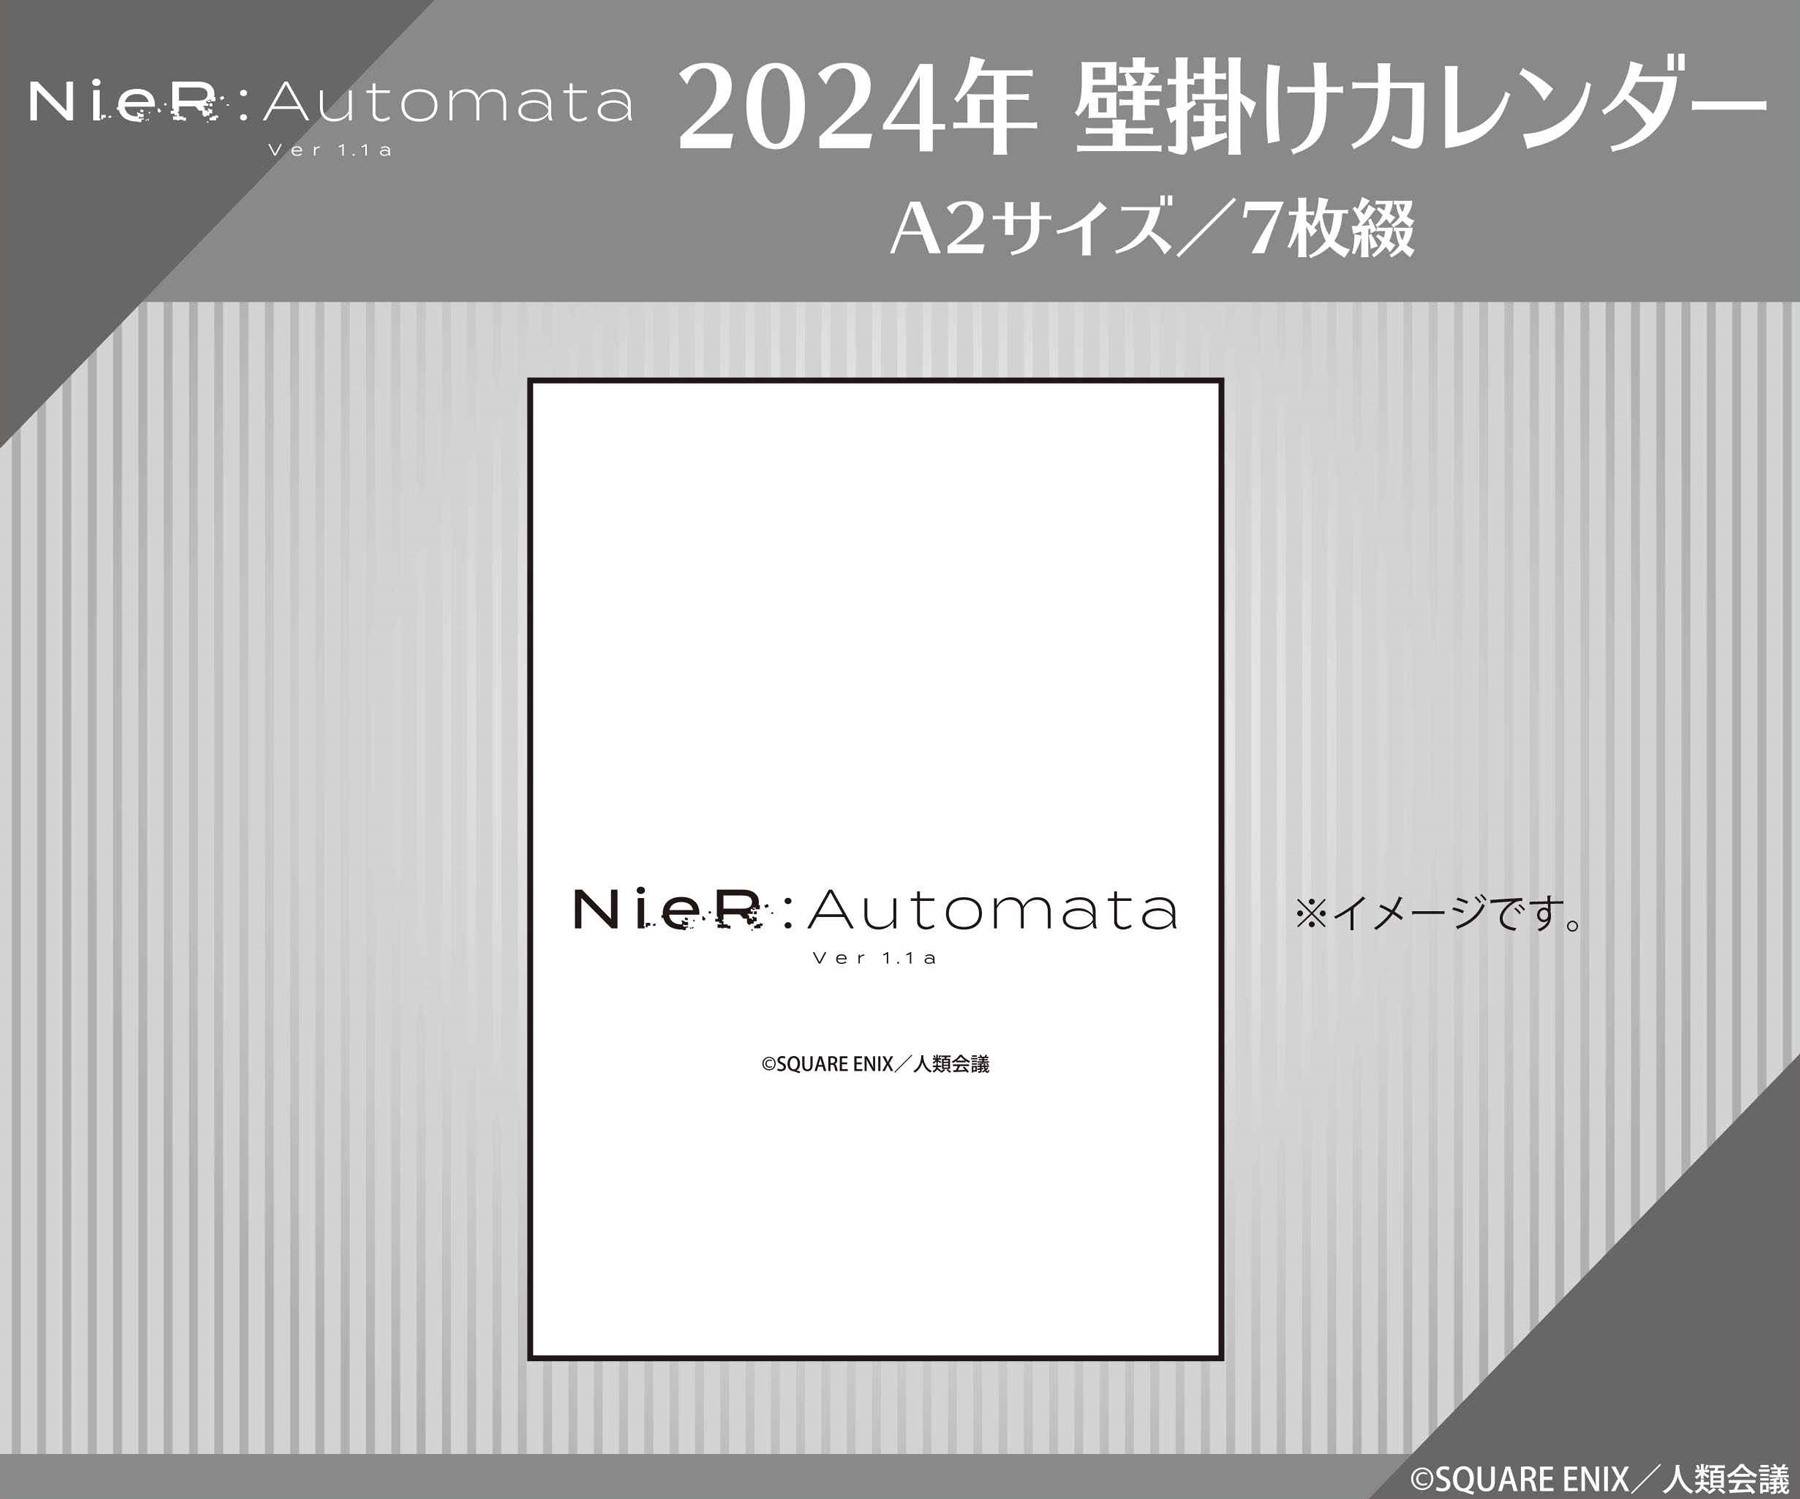 TVアニメ「NieR:Automata Ver1.1a」 CL-110 2024年壁掛けカレンダー